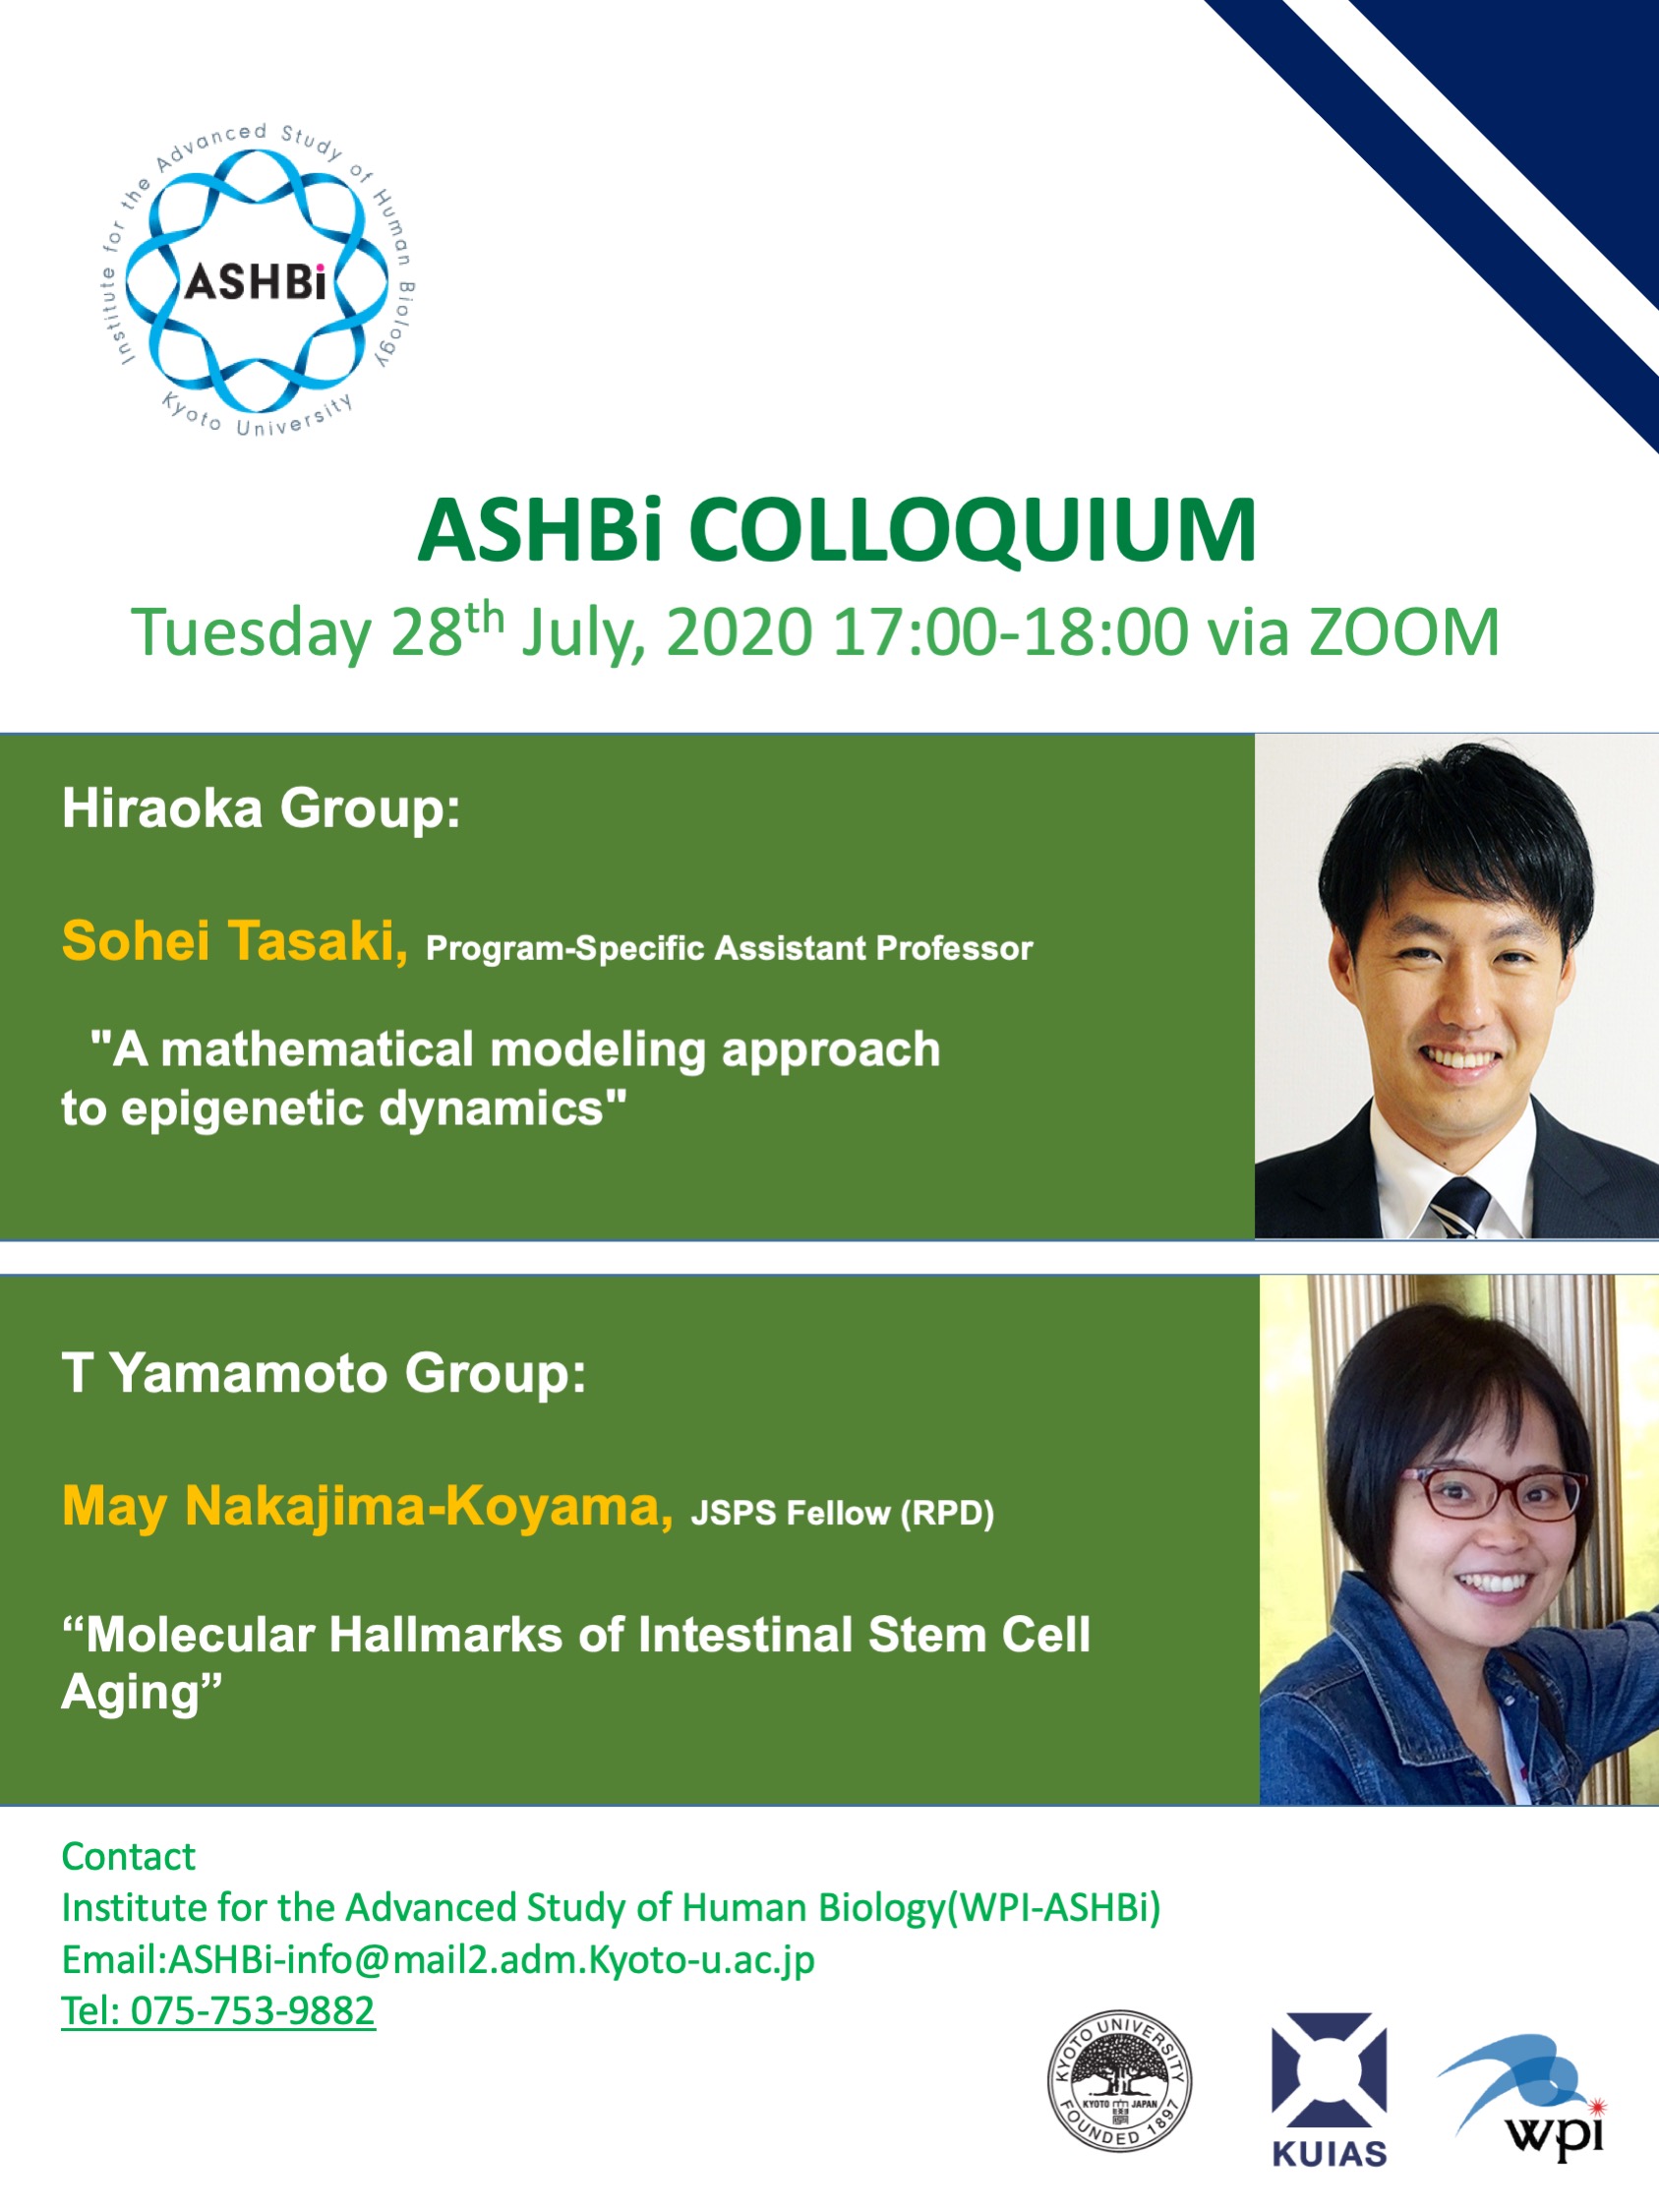 9th ASHBi Colloquium (Hiraoka Group and T Yamamoto Group)